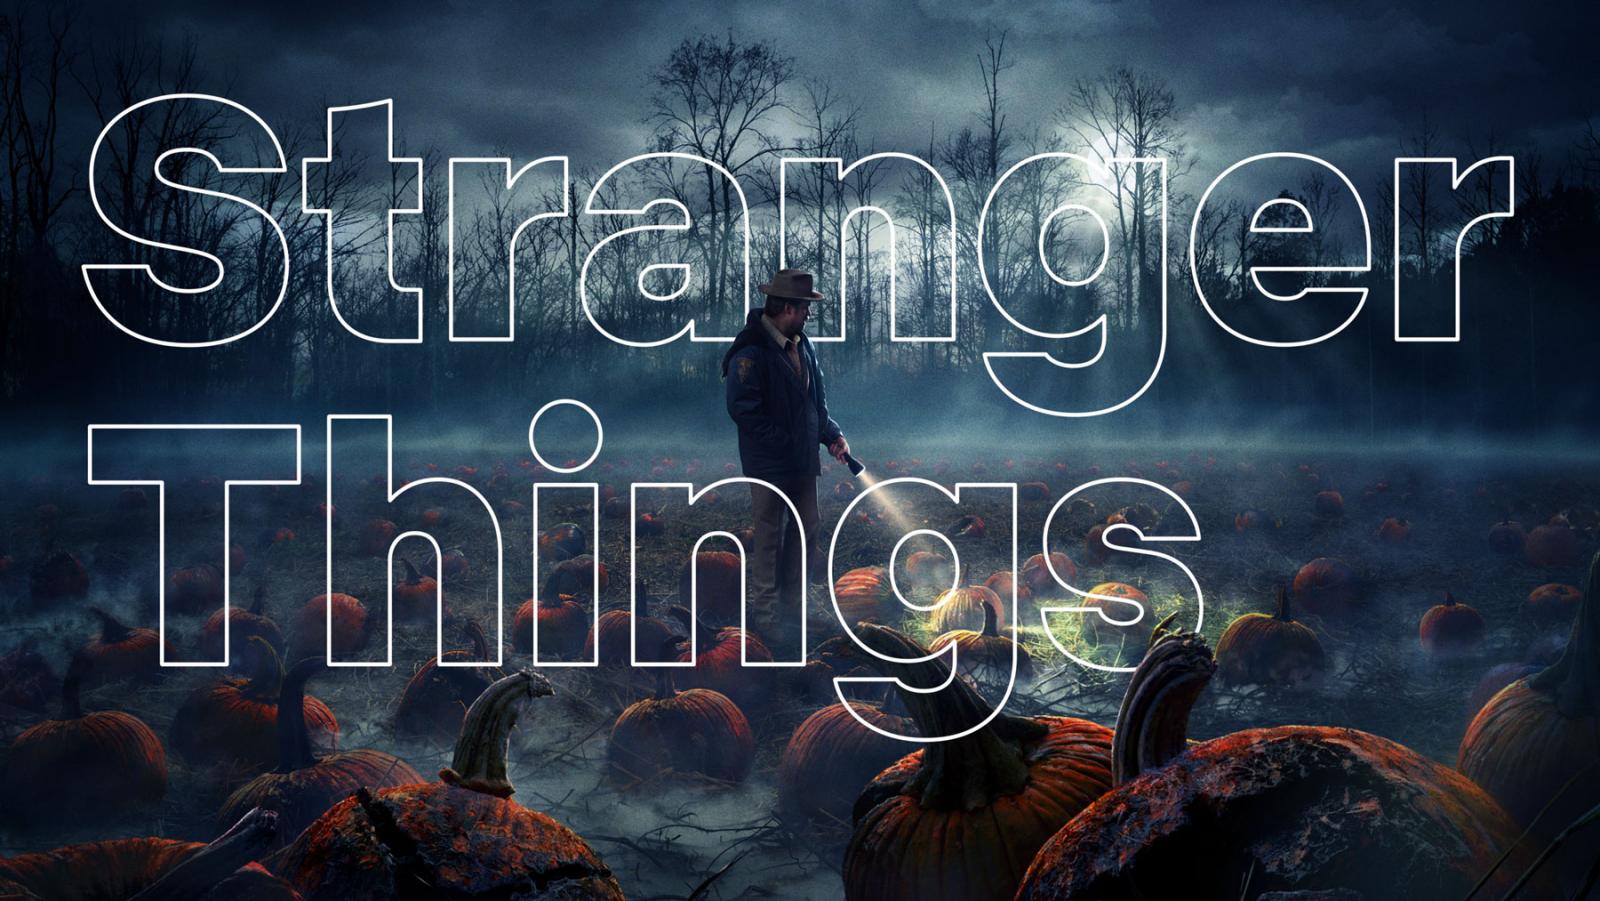 Tipografia Netflix - Stranger Things